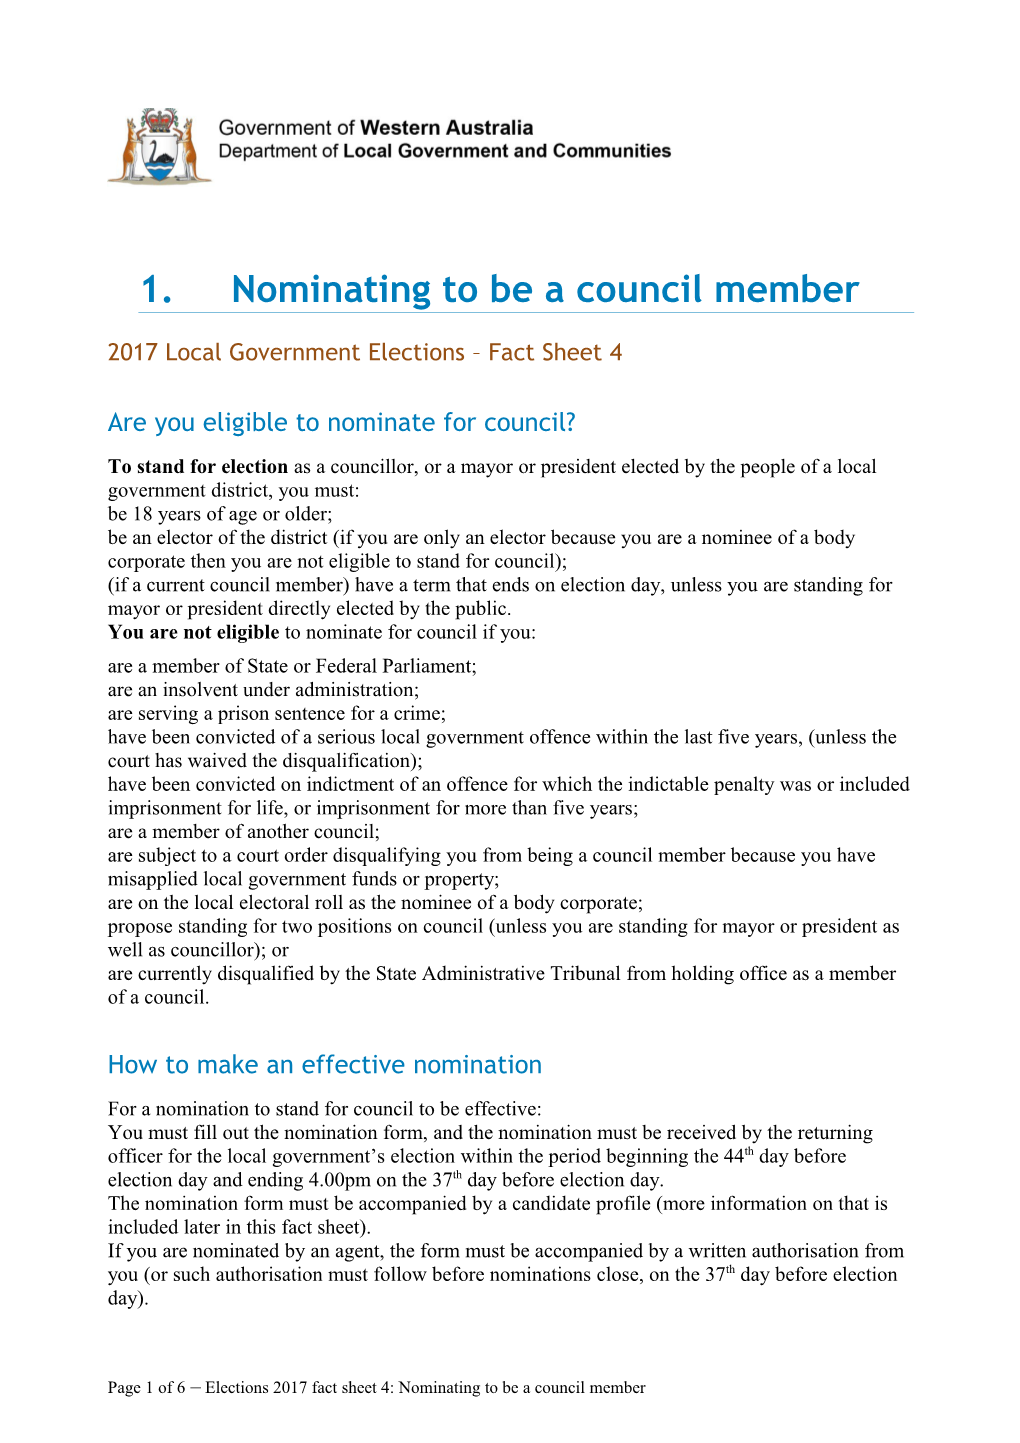 Fact Sheet 04 - Nominating to Be a Council Member